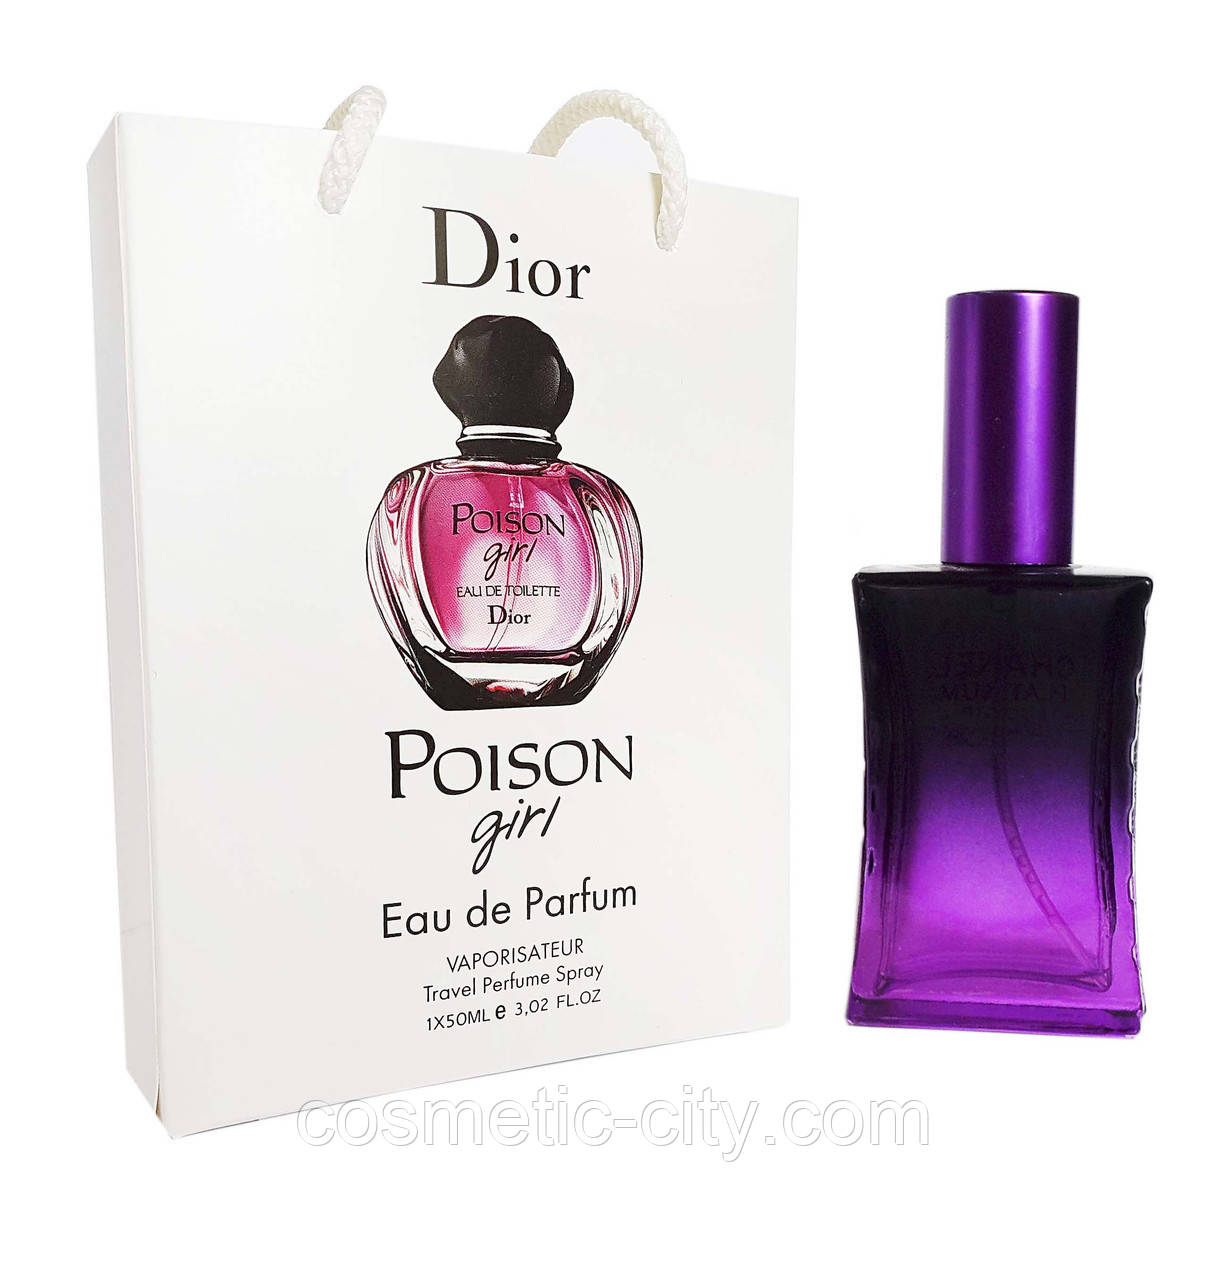 Christian Dior Poison Girl - Travel Perfume 50ml